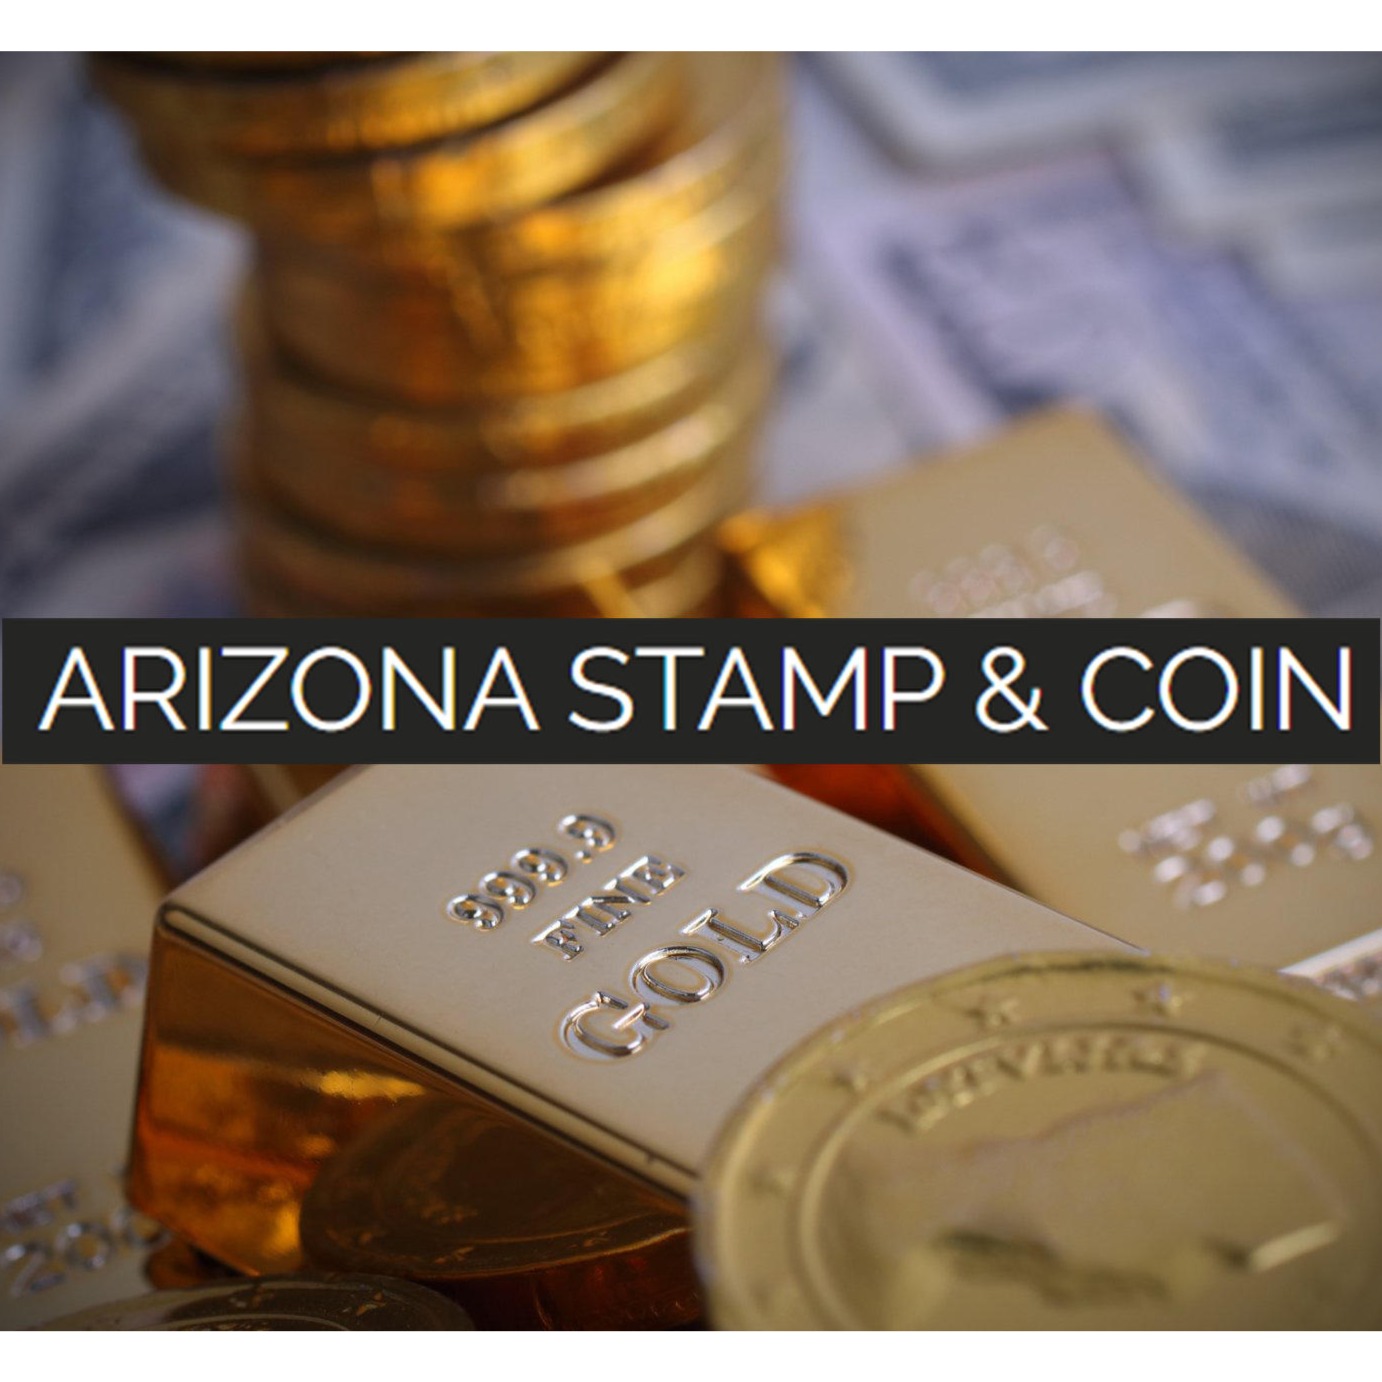 Arizona Stamp & Coin Inc